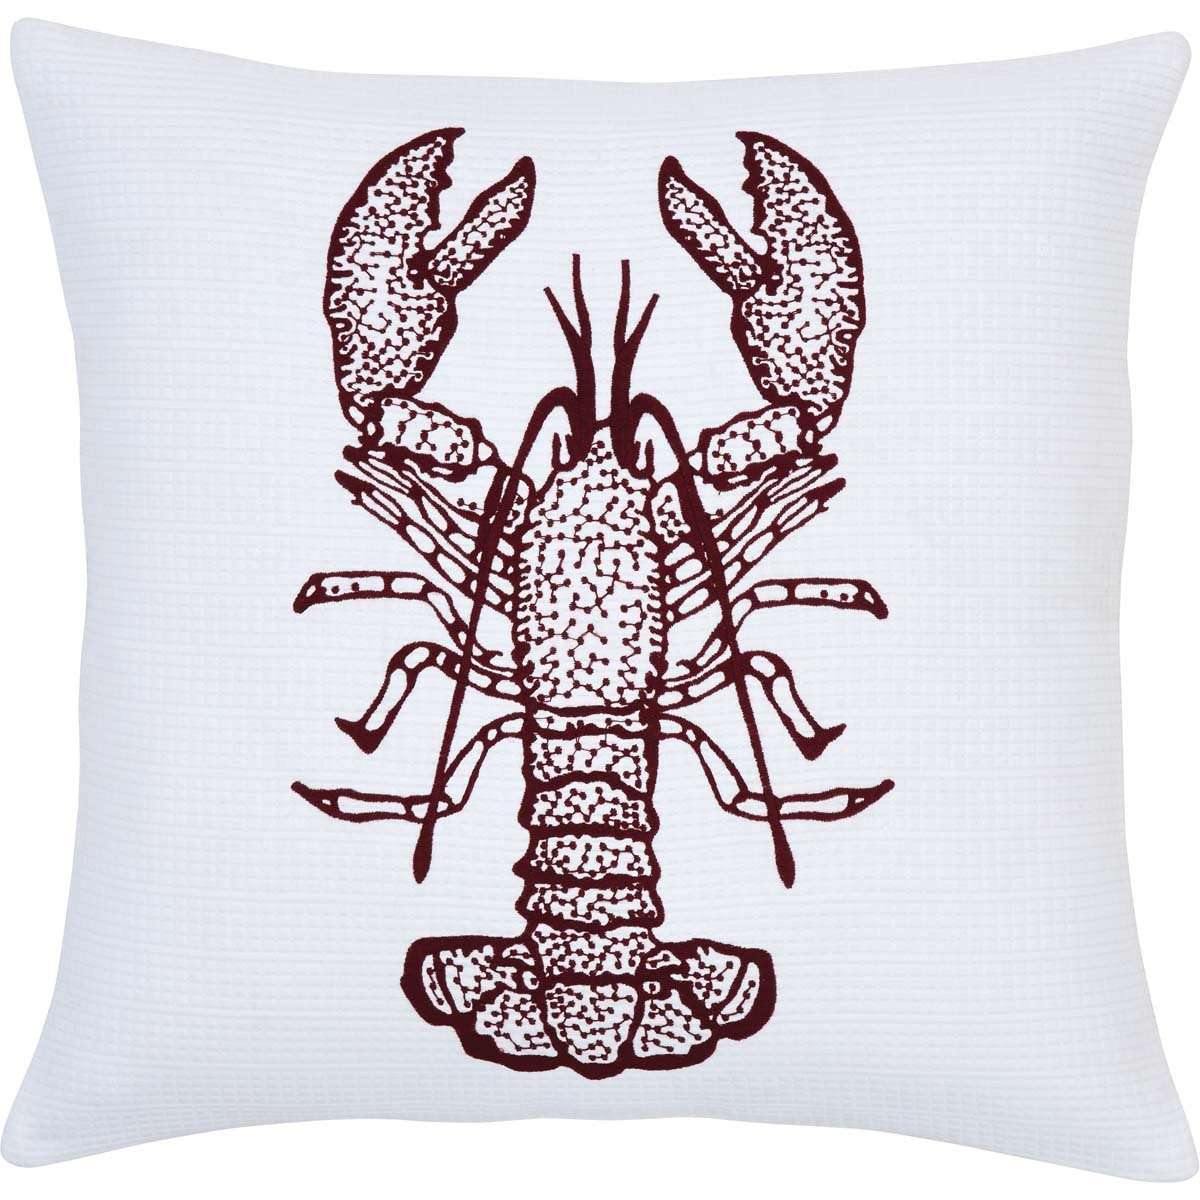 Lobster Pillow 18x18 - The Fox Decor